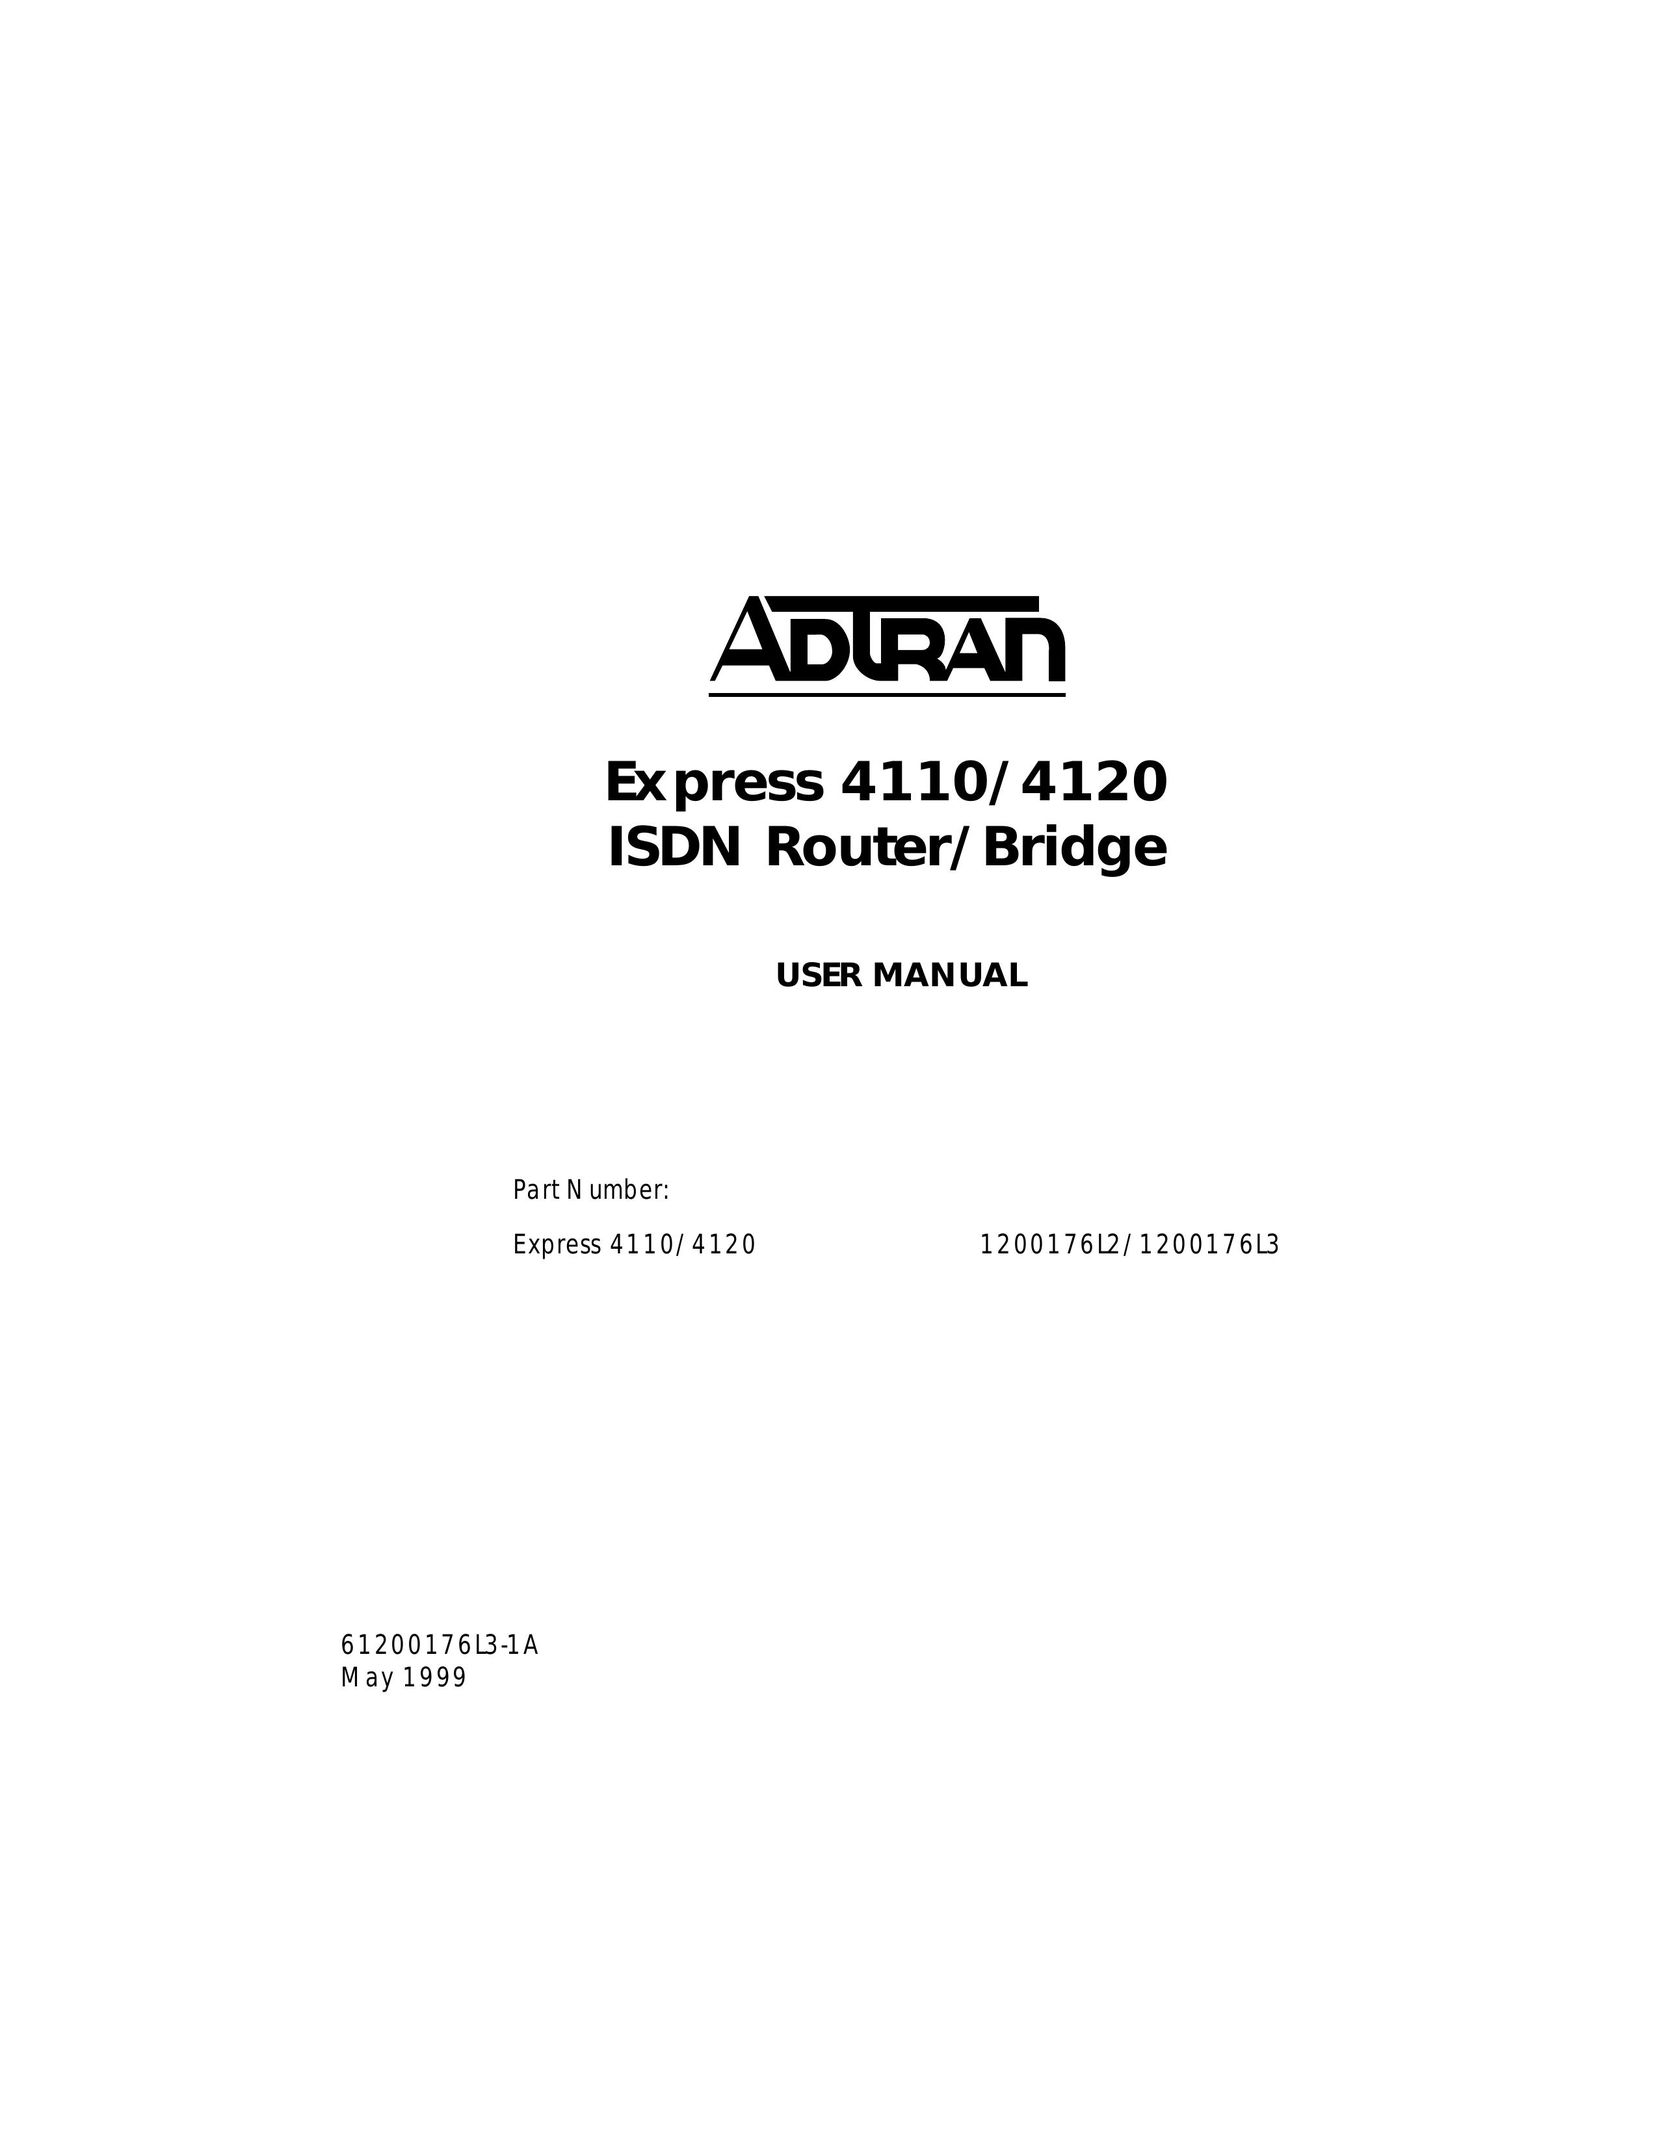 ADTRAN 4120 Network Router User Manual